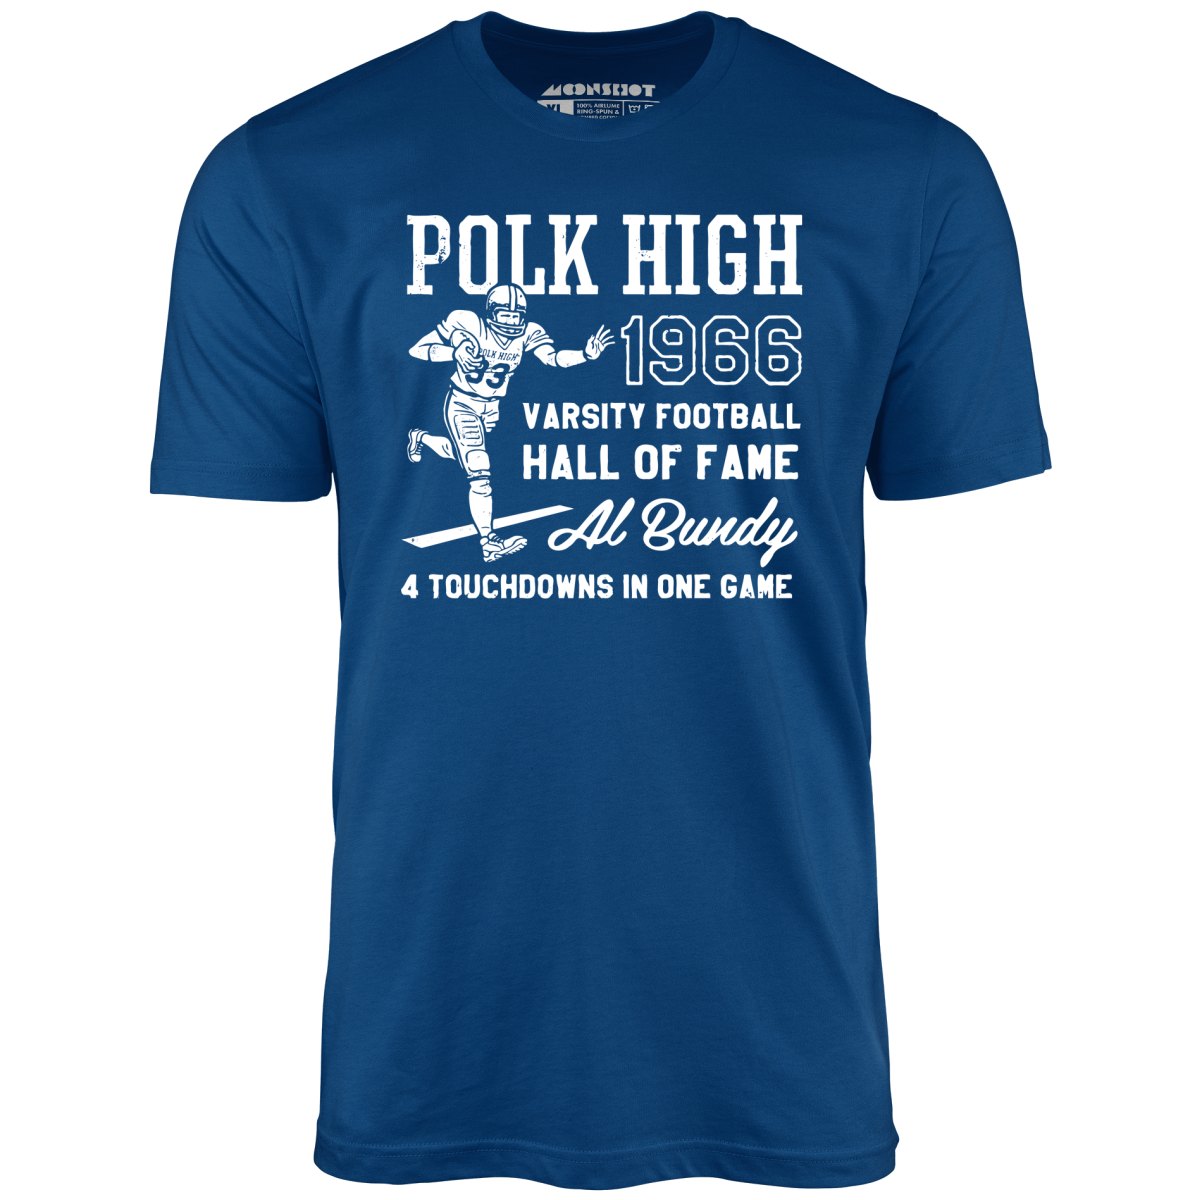 Al Bundy - 1966 Polk High Varsity Football Hall of Fame - Unisex T-Shirt